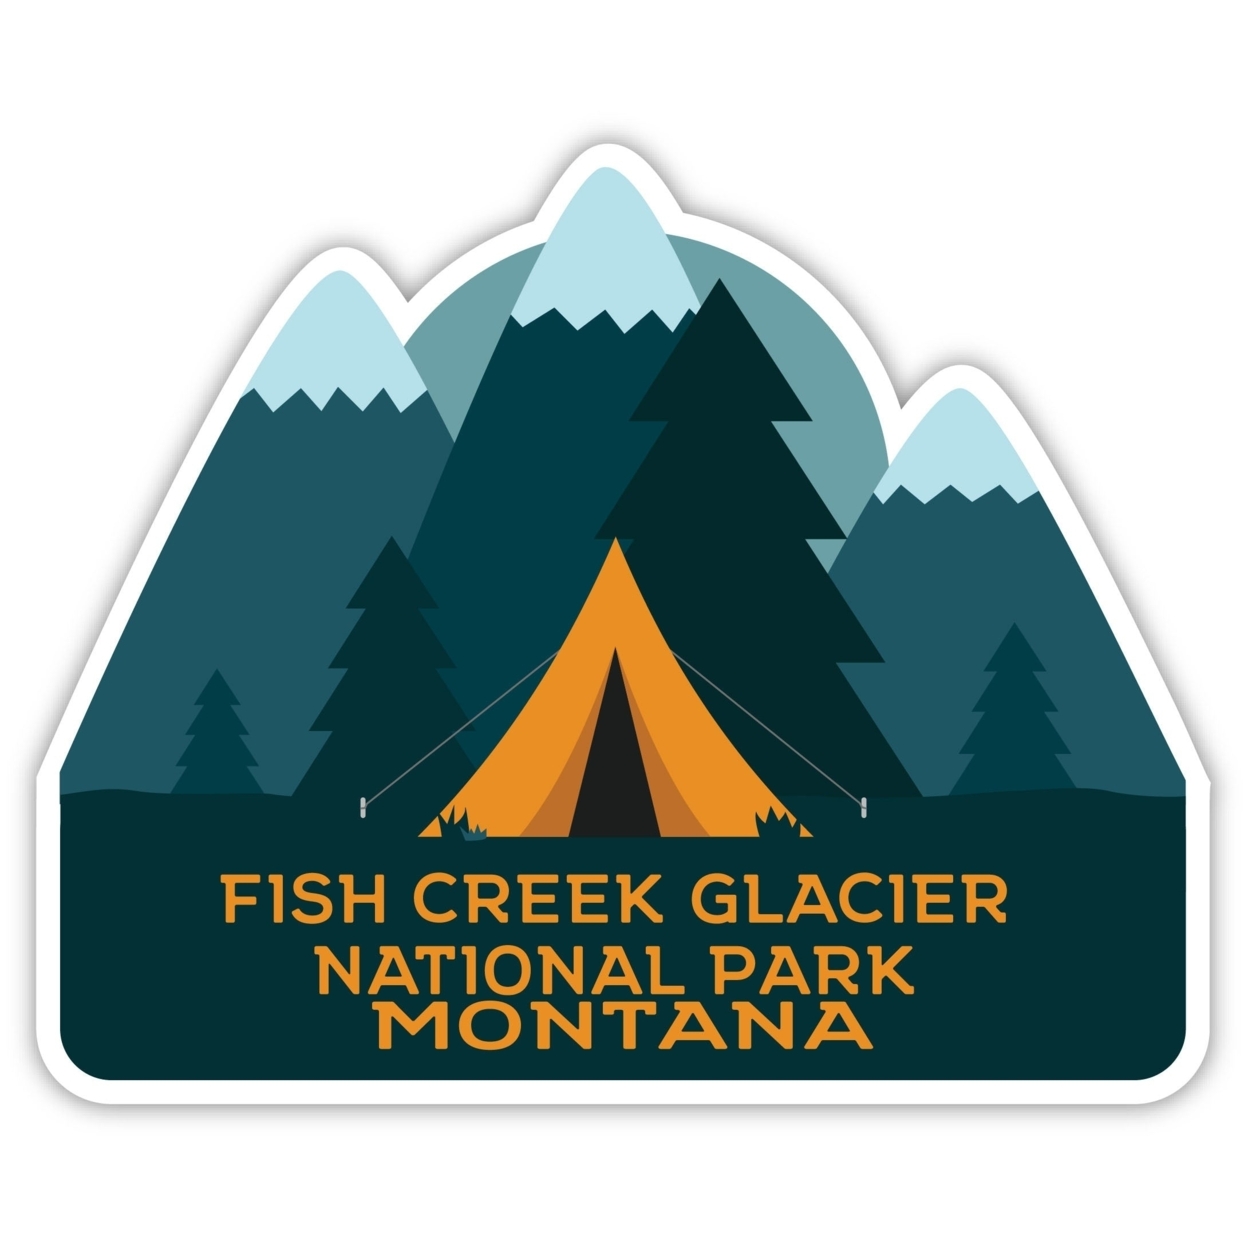 Fish Creek Glacier National Park Montana Souvenir Decorative Stickers (Choose Theme And Size) - 4-Pack, 12-Inch, Tent